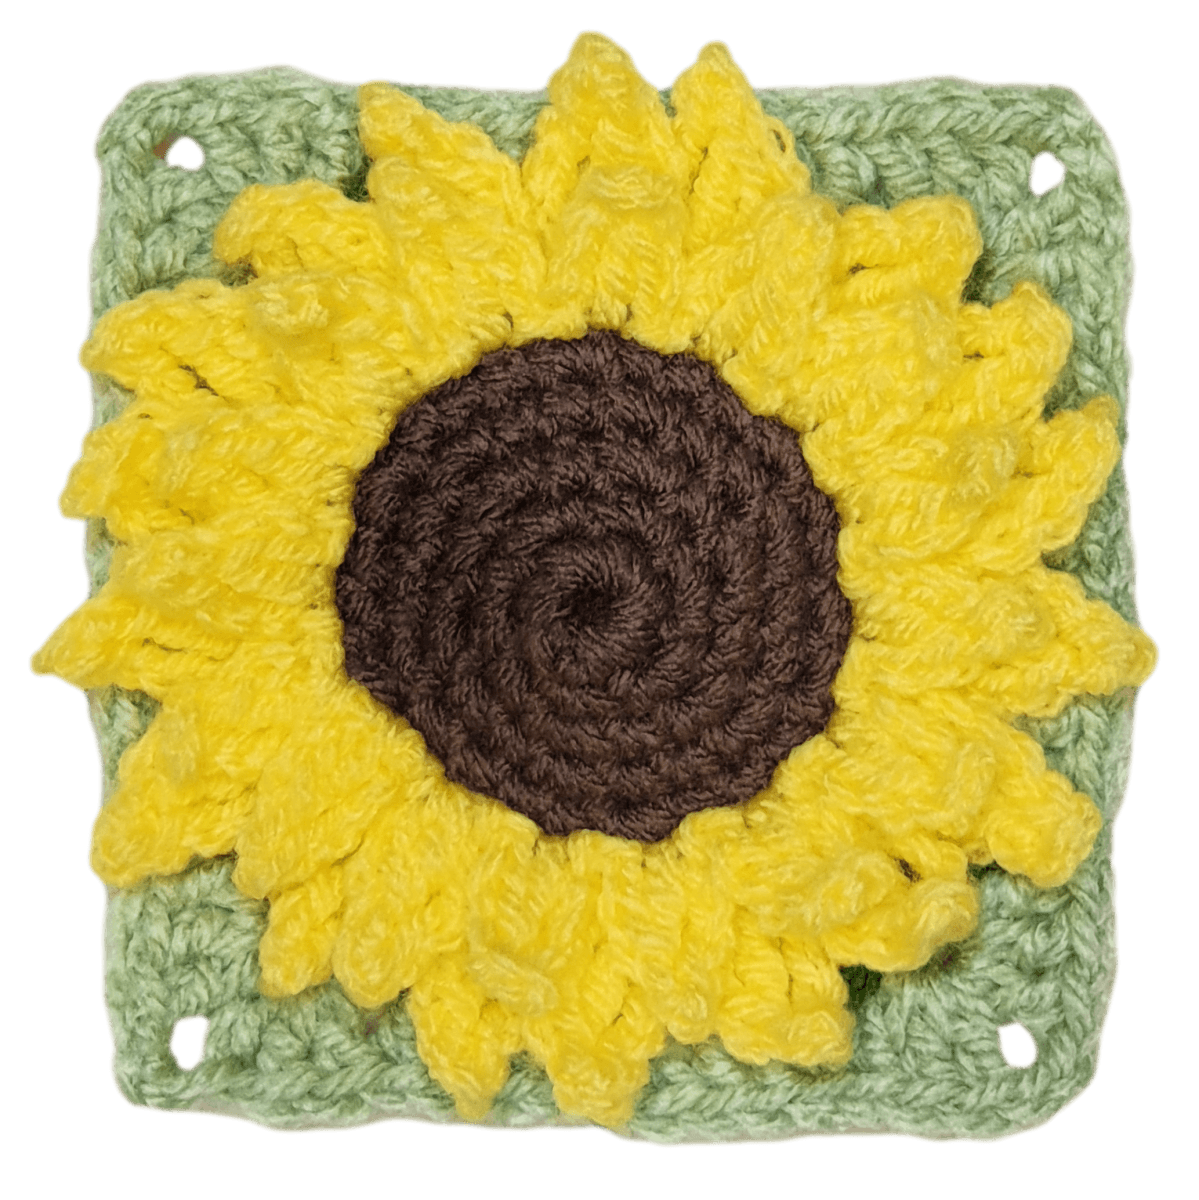 3D Crochet Sunflower Granny Square - The Secret Yarnery